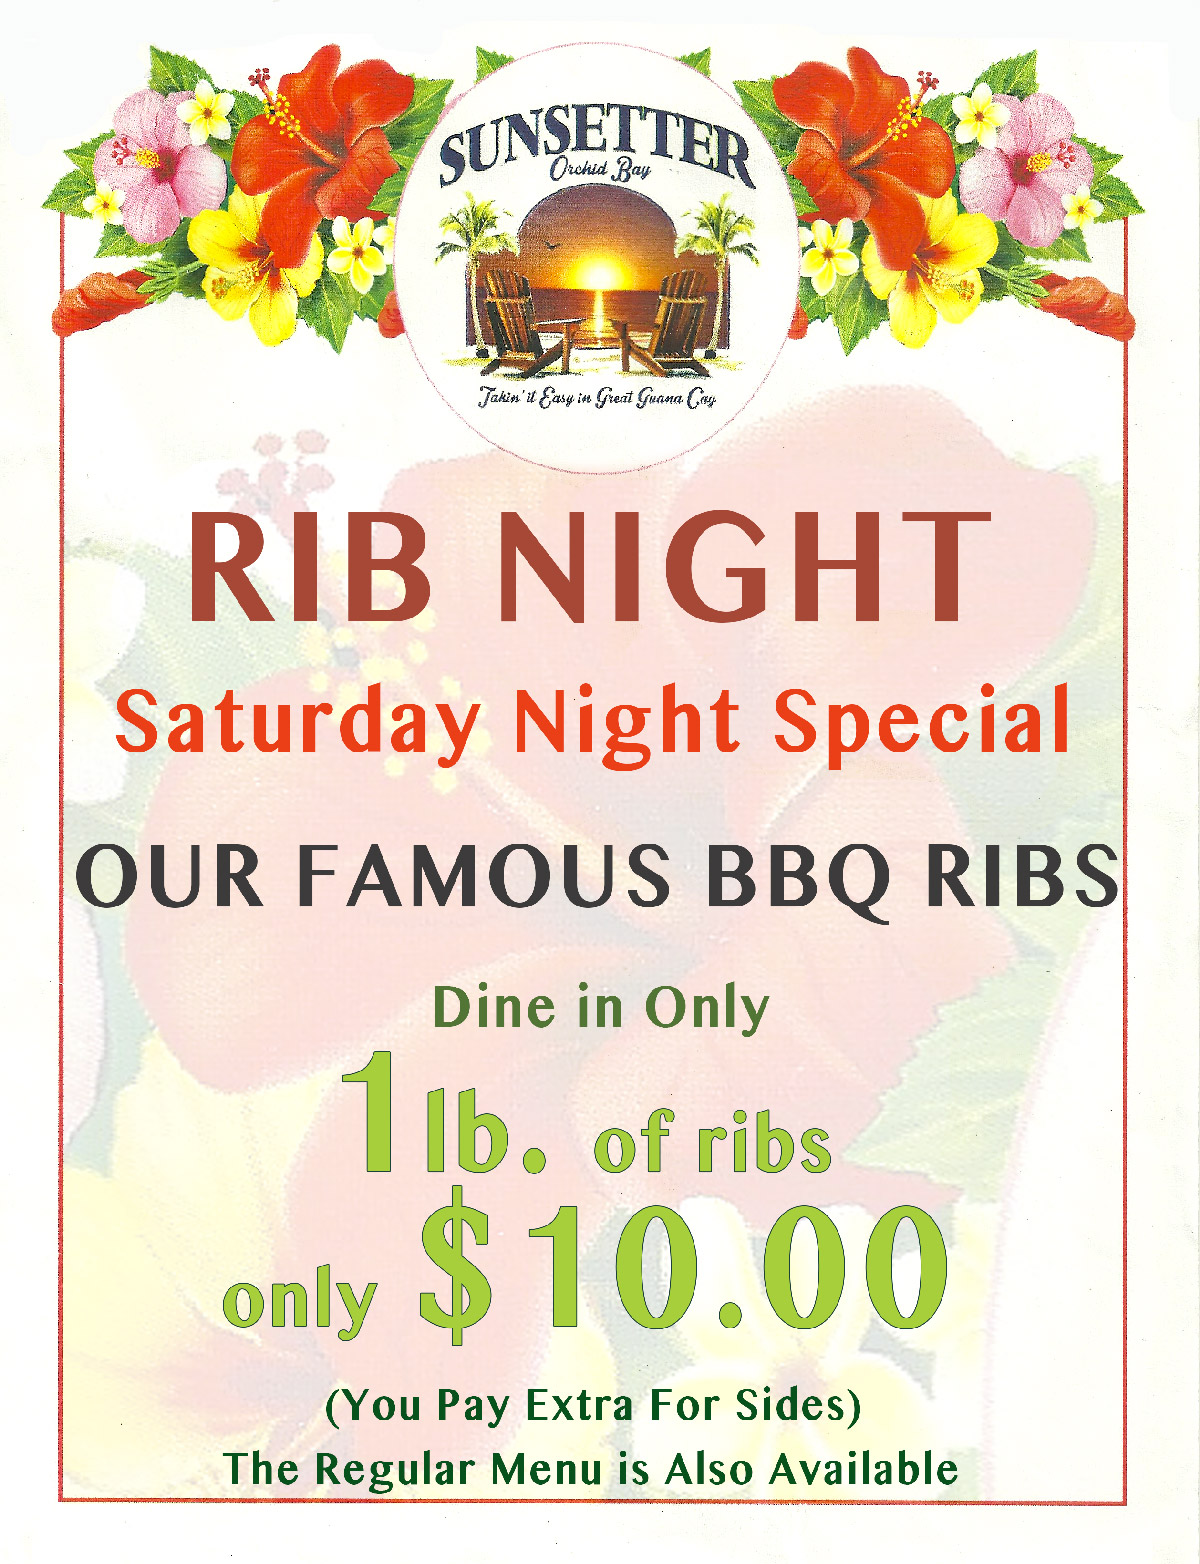 The Rib Night Special